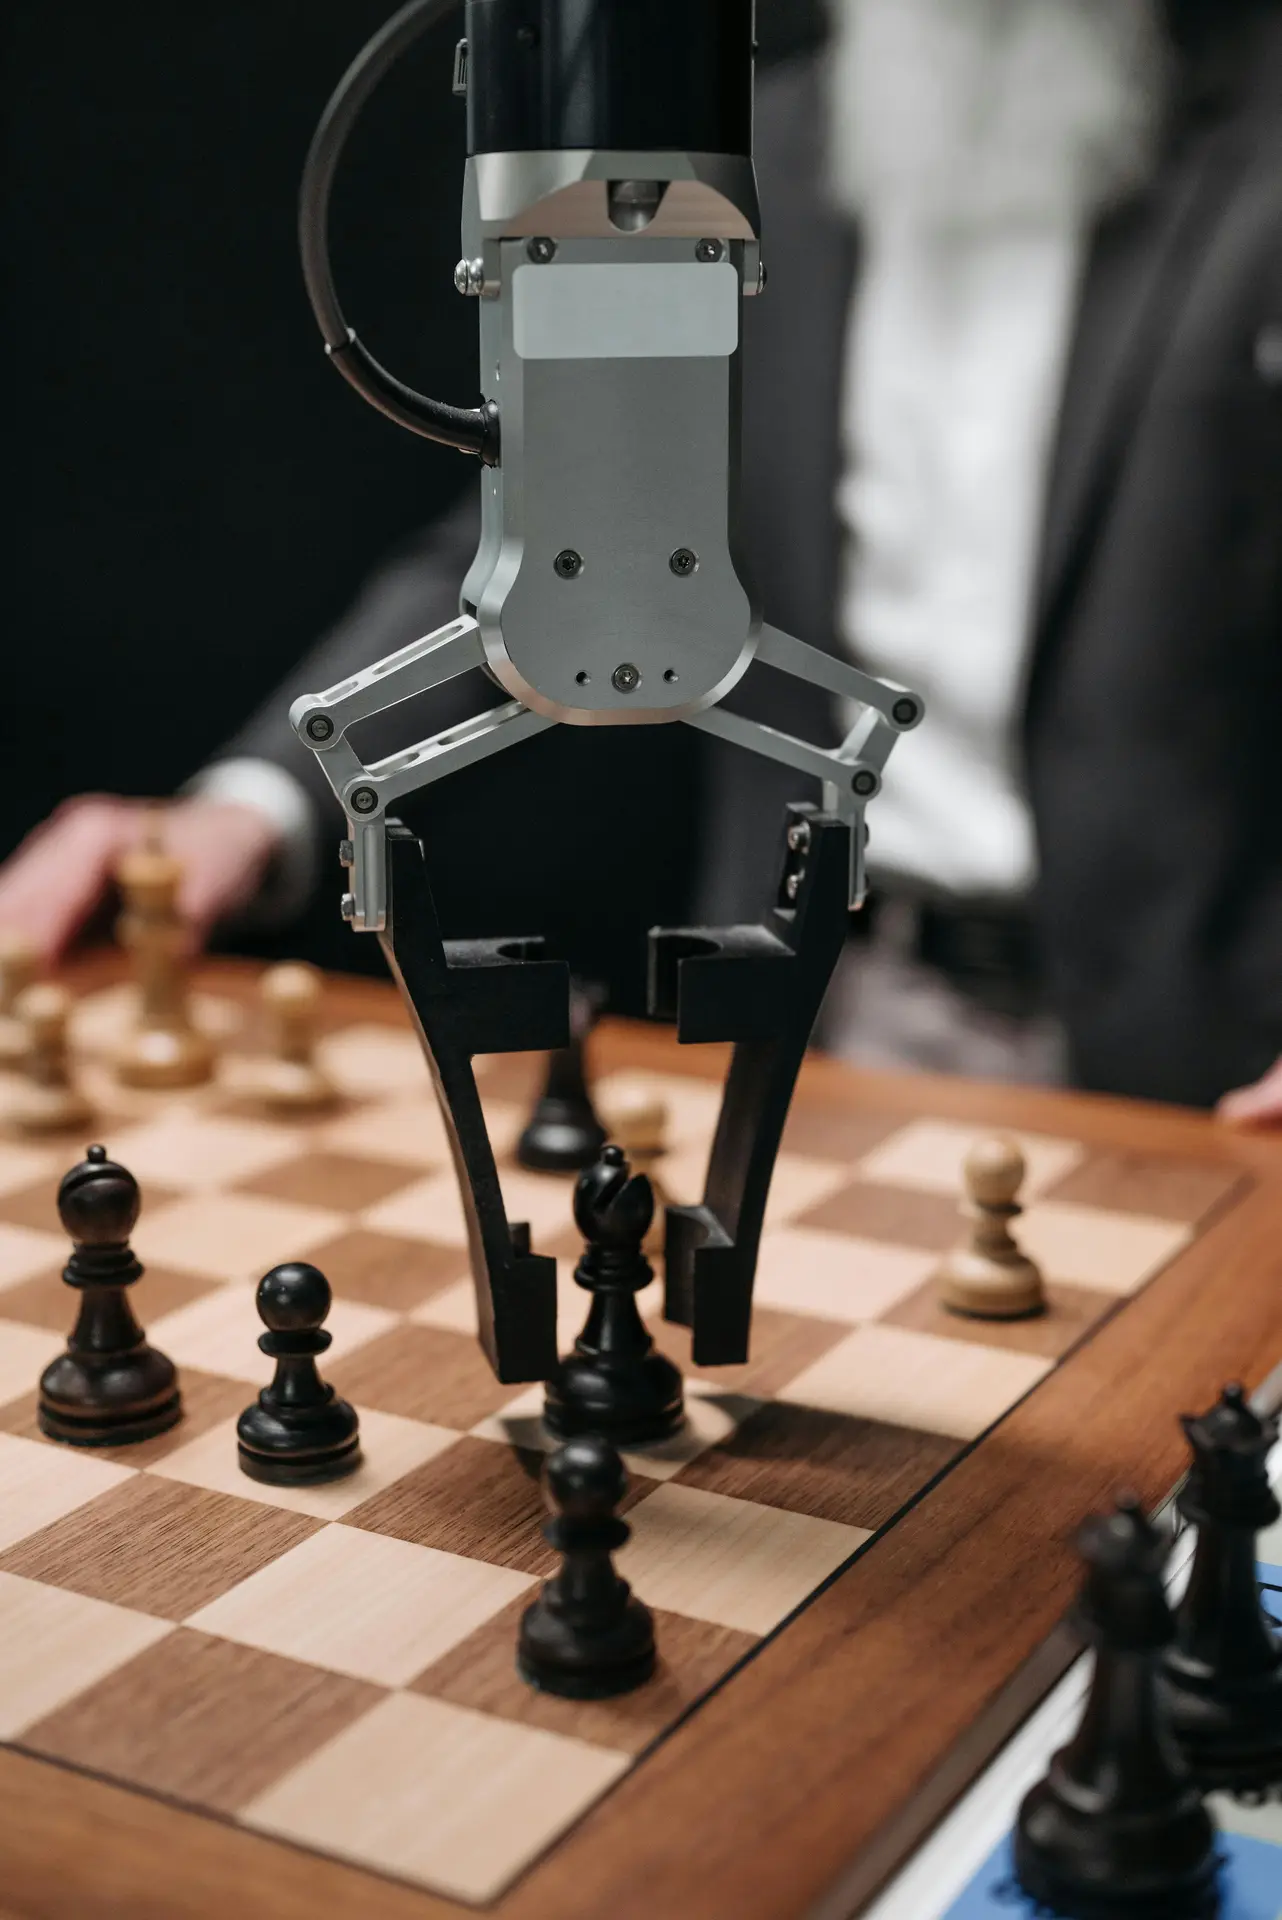 AI Robot Playing Chase with Human